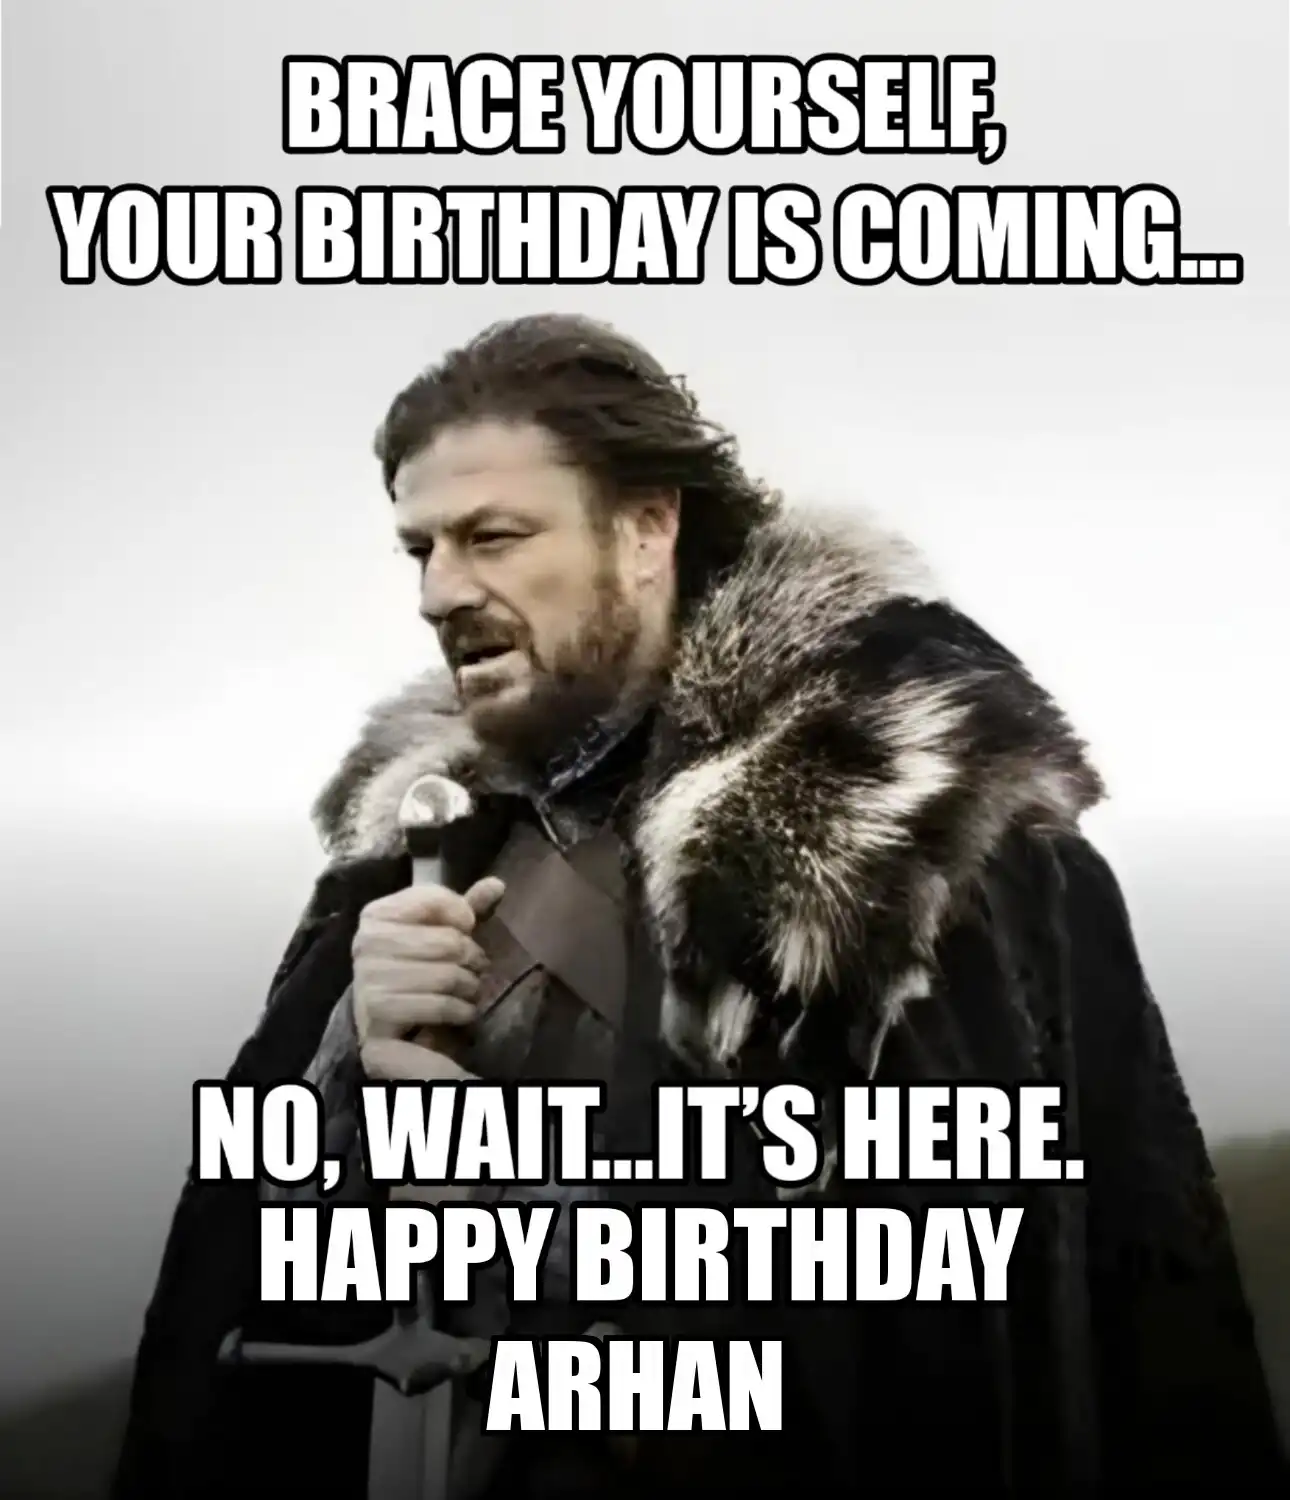 Happy Birthday Arhan Brace Yourself Your Birthday Is Coming Meme